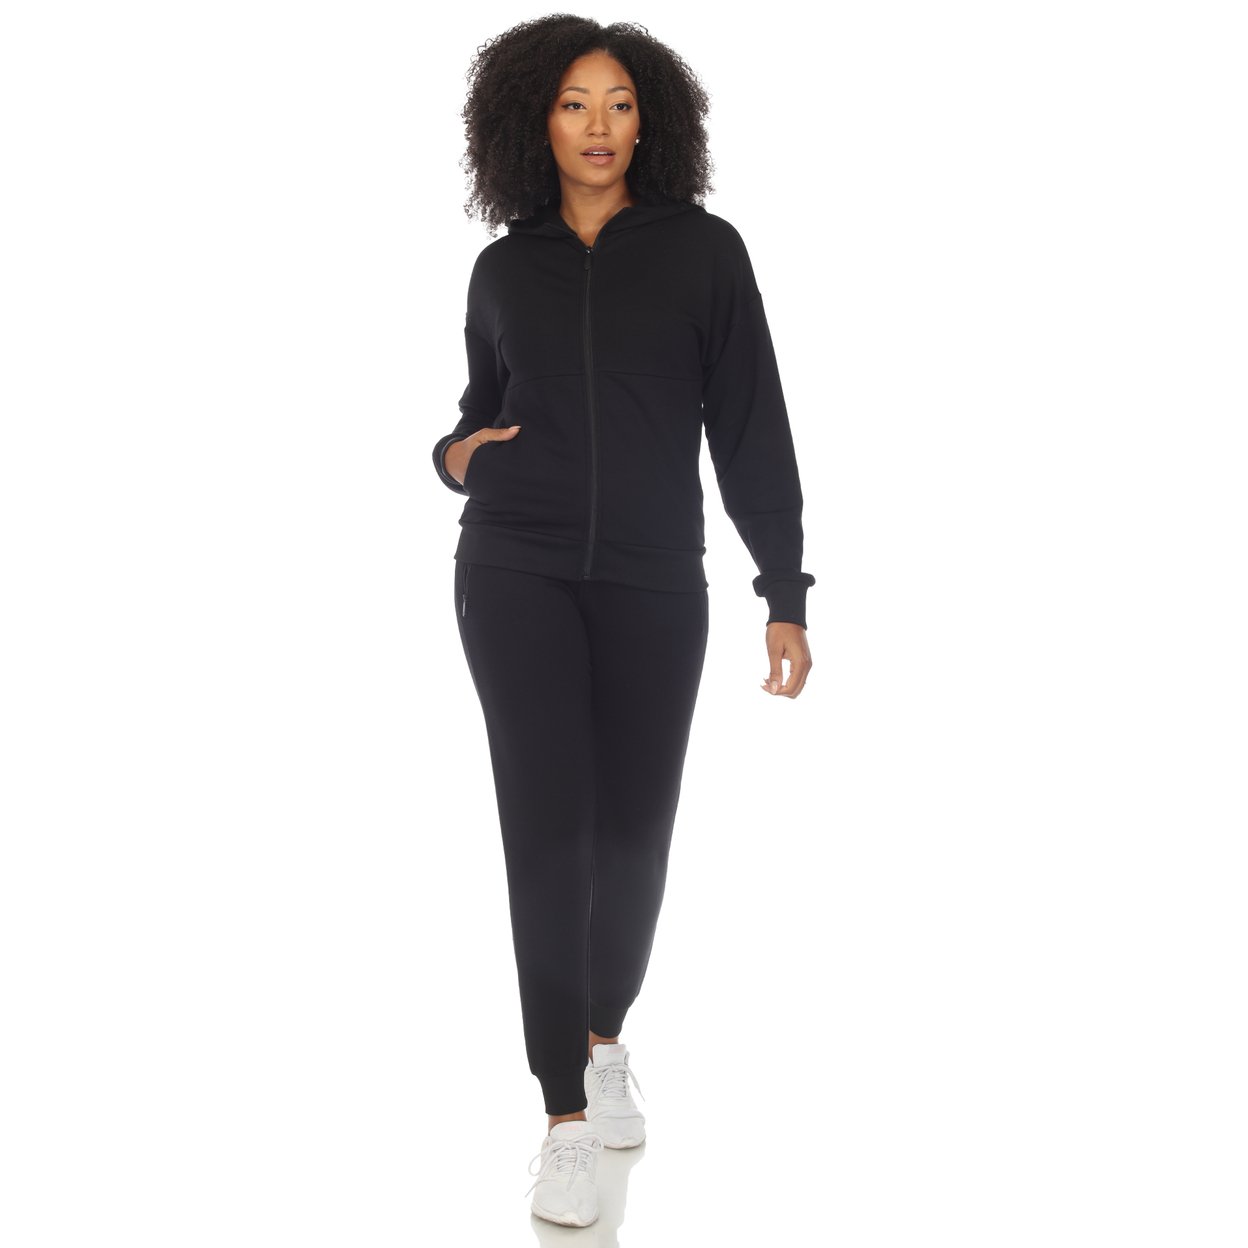 White Mark Women's 2-PC Fleece Sweatsuit Set - Black, Small